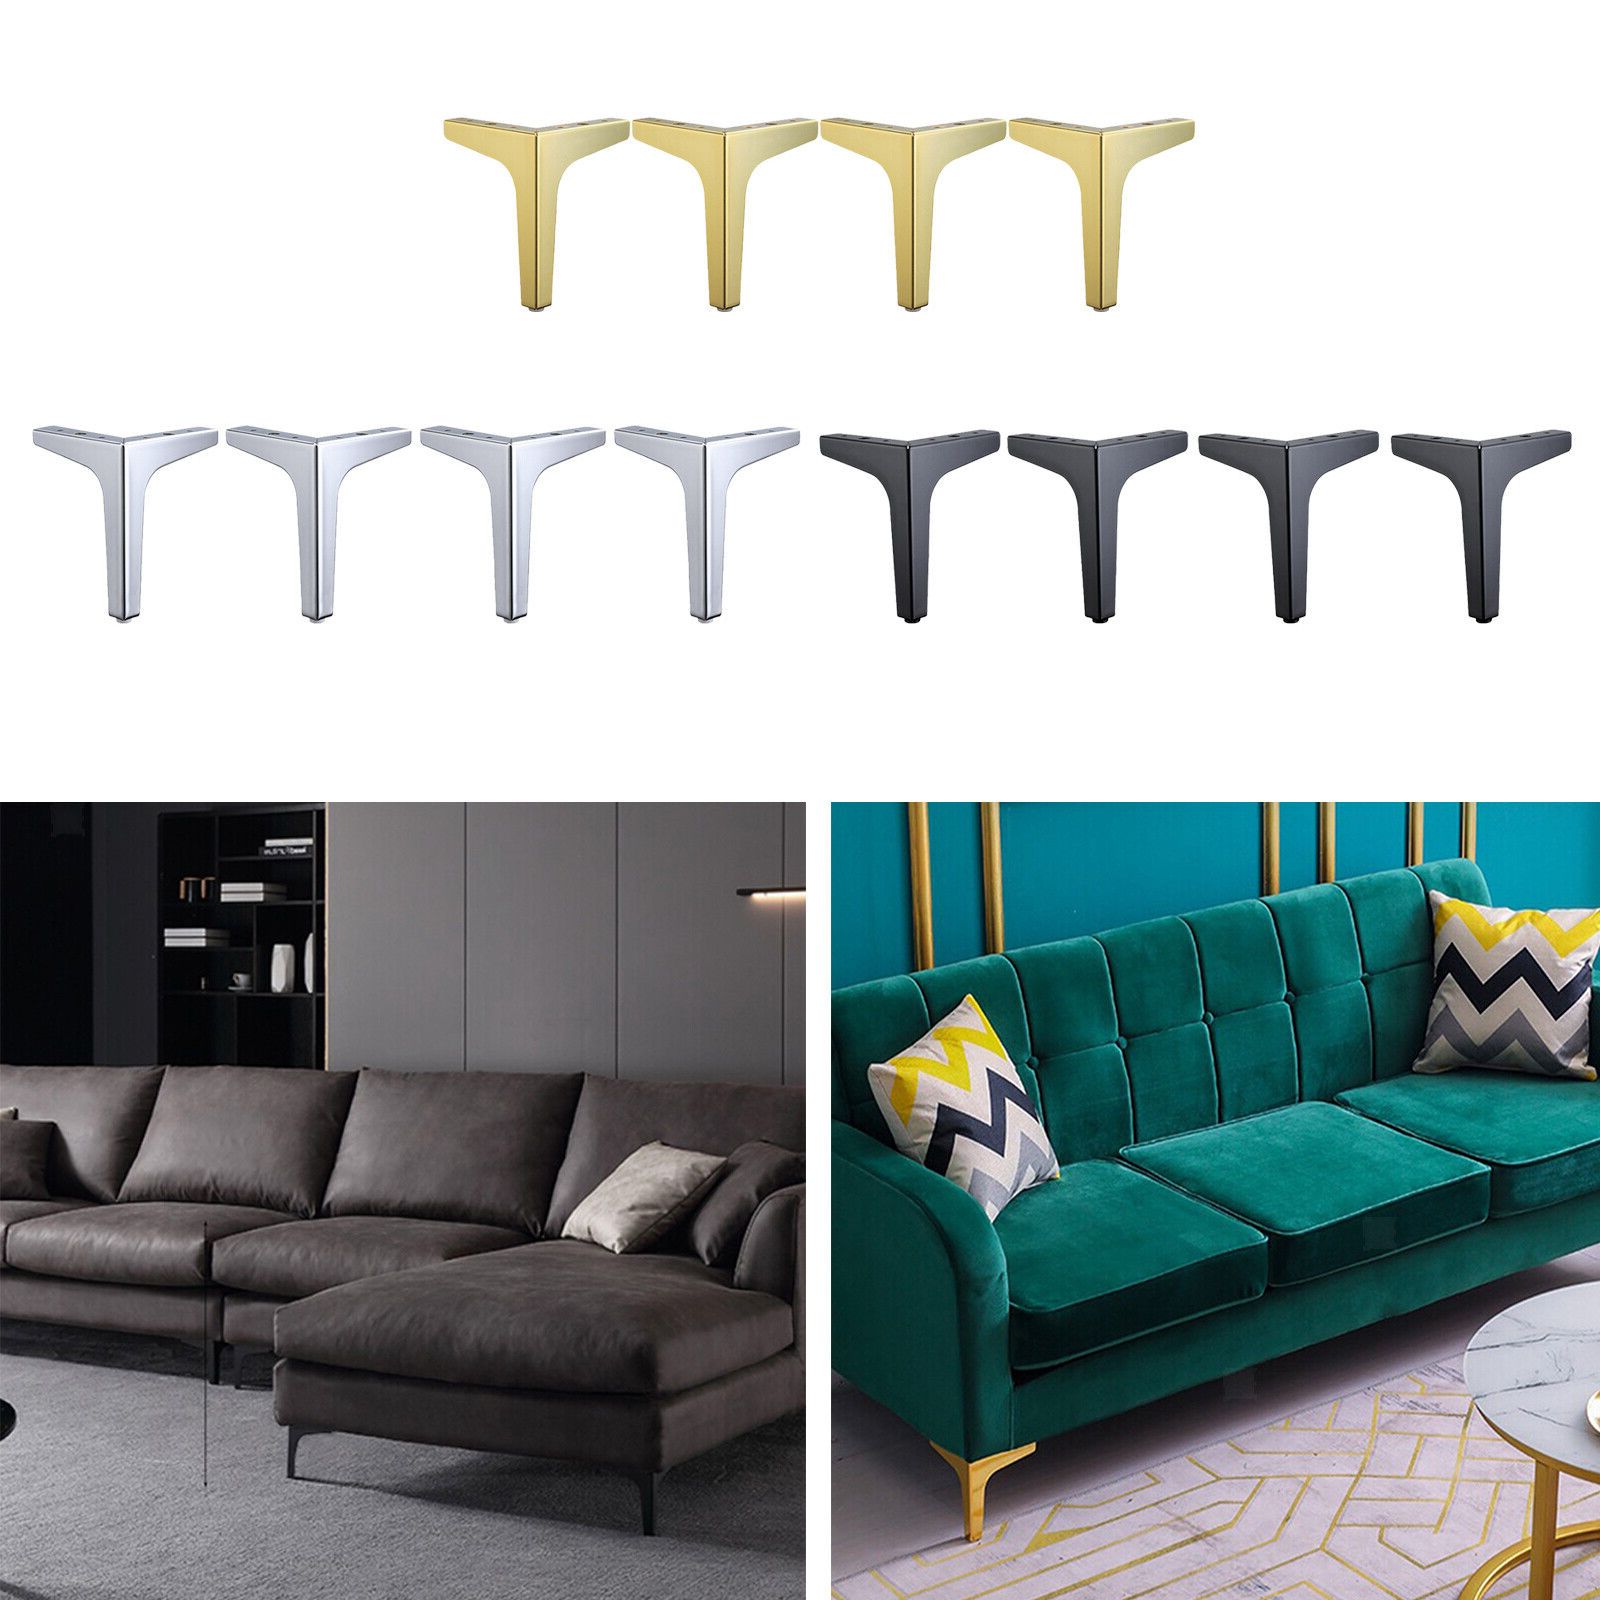 Metal Furniture Legs Sofa Loveseat Chair Sectional – Set Of 4 Black/gold/ Chrome | Ebay Regarding Chrome Metal Legs Sofas (View 11 of 20)